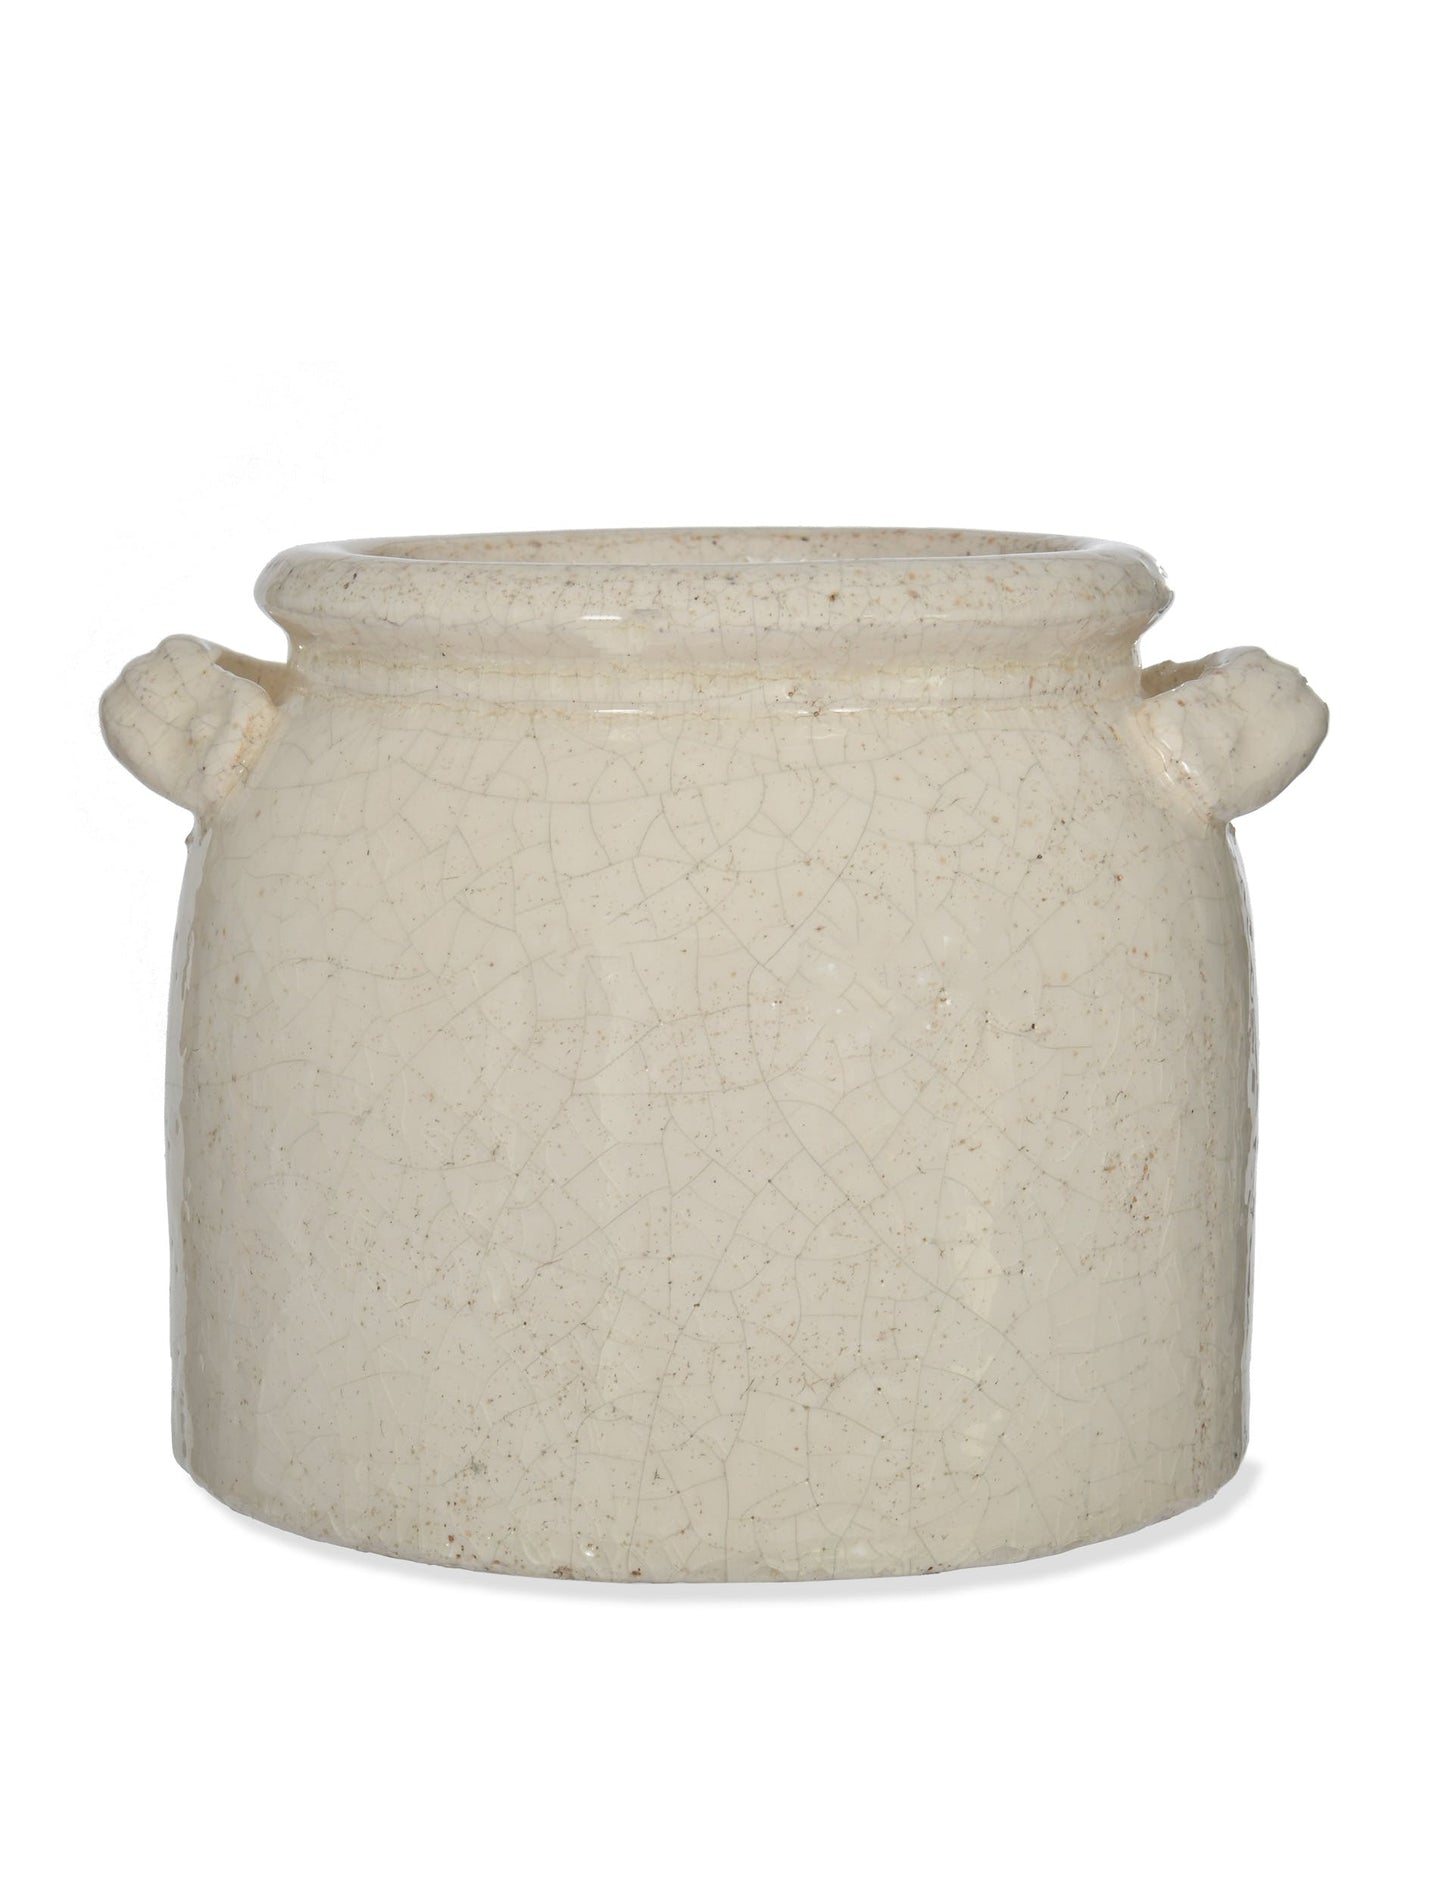 Off-White Ravello Pot with Handles